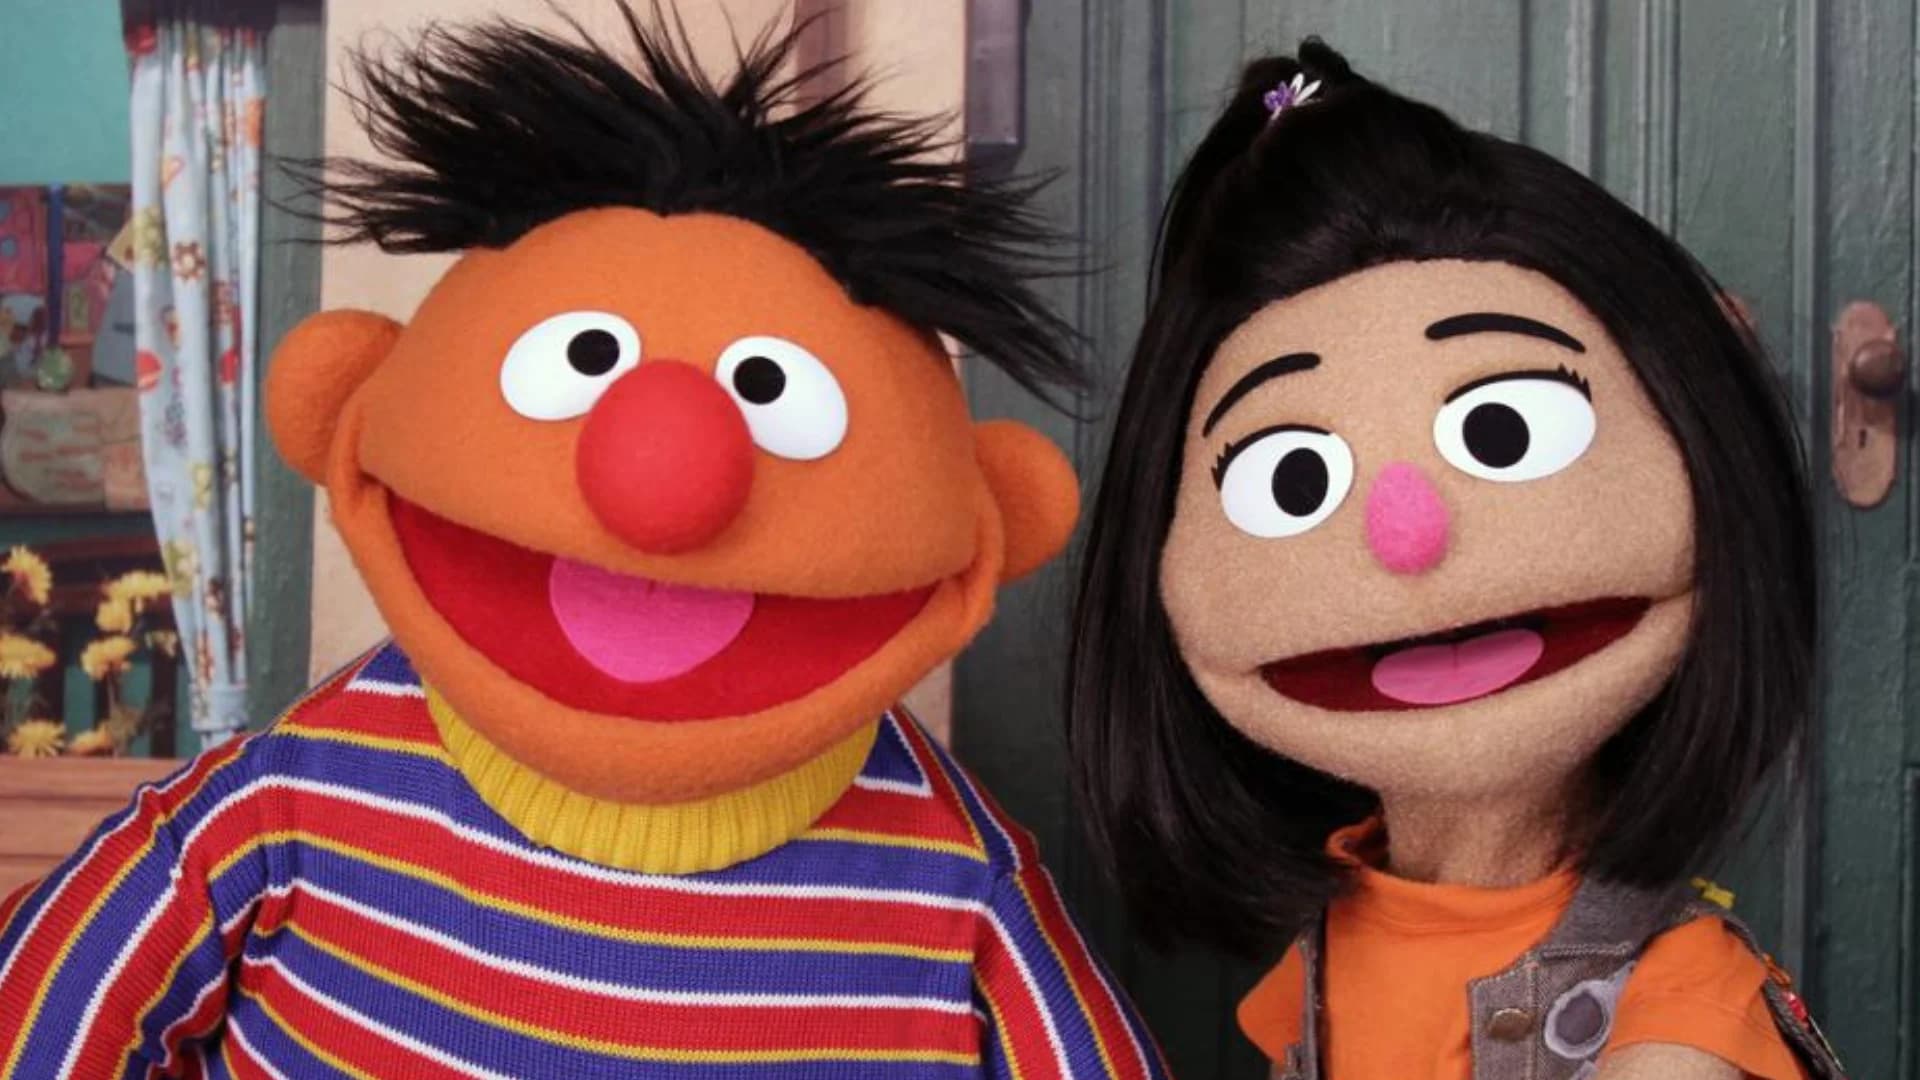 ‘Sesame Street’ debuts Ji-Young, first Asian American muppet